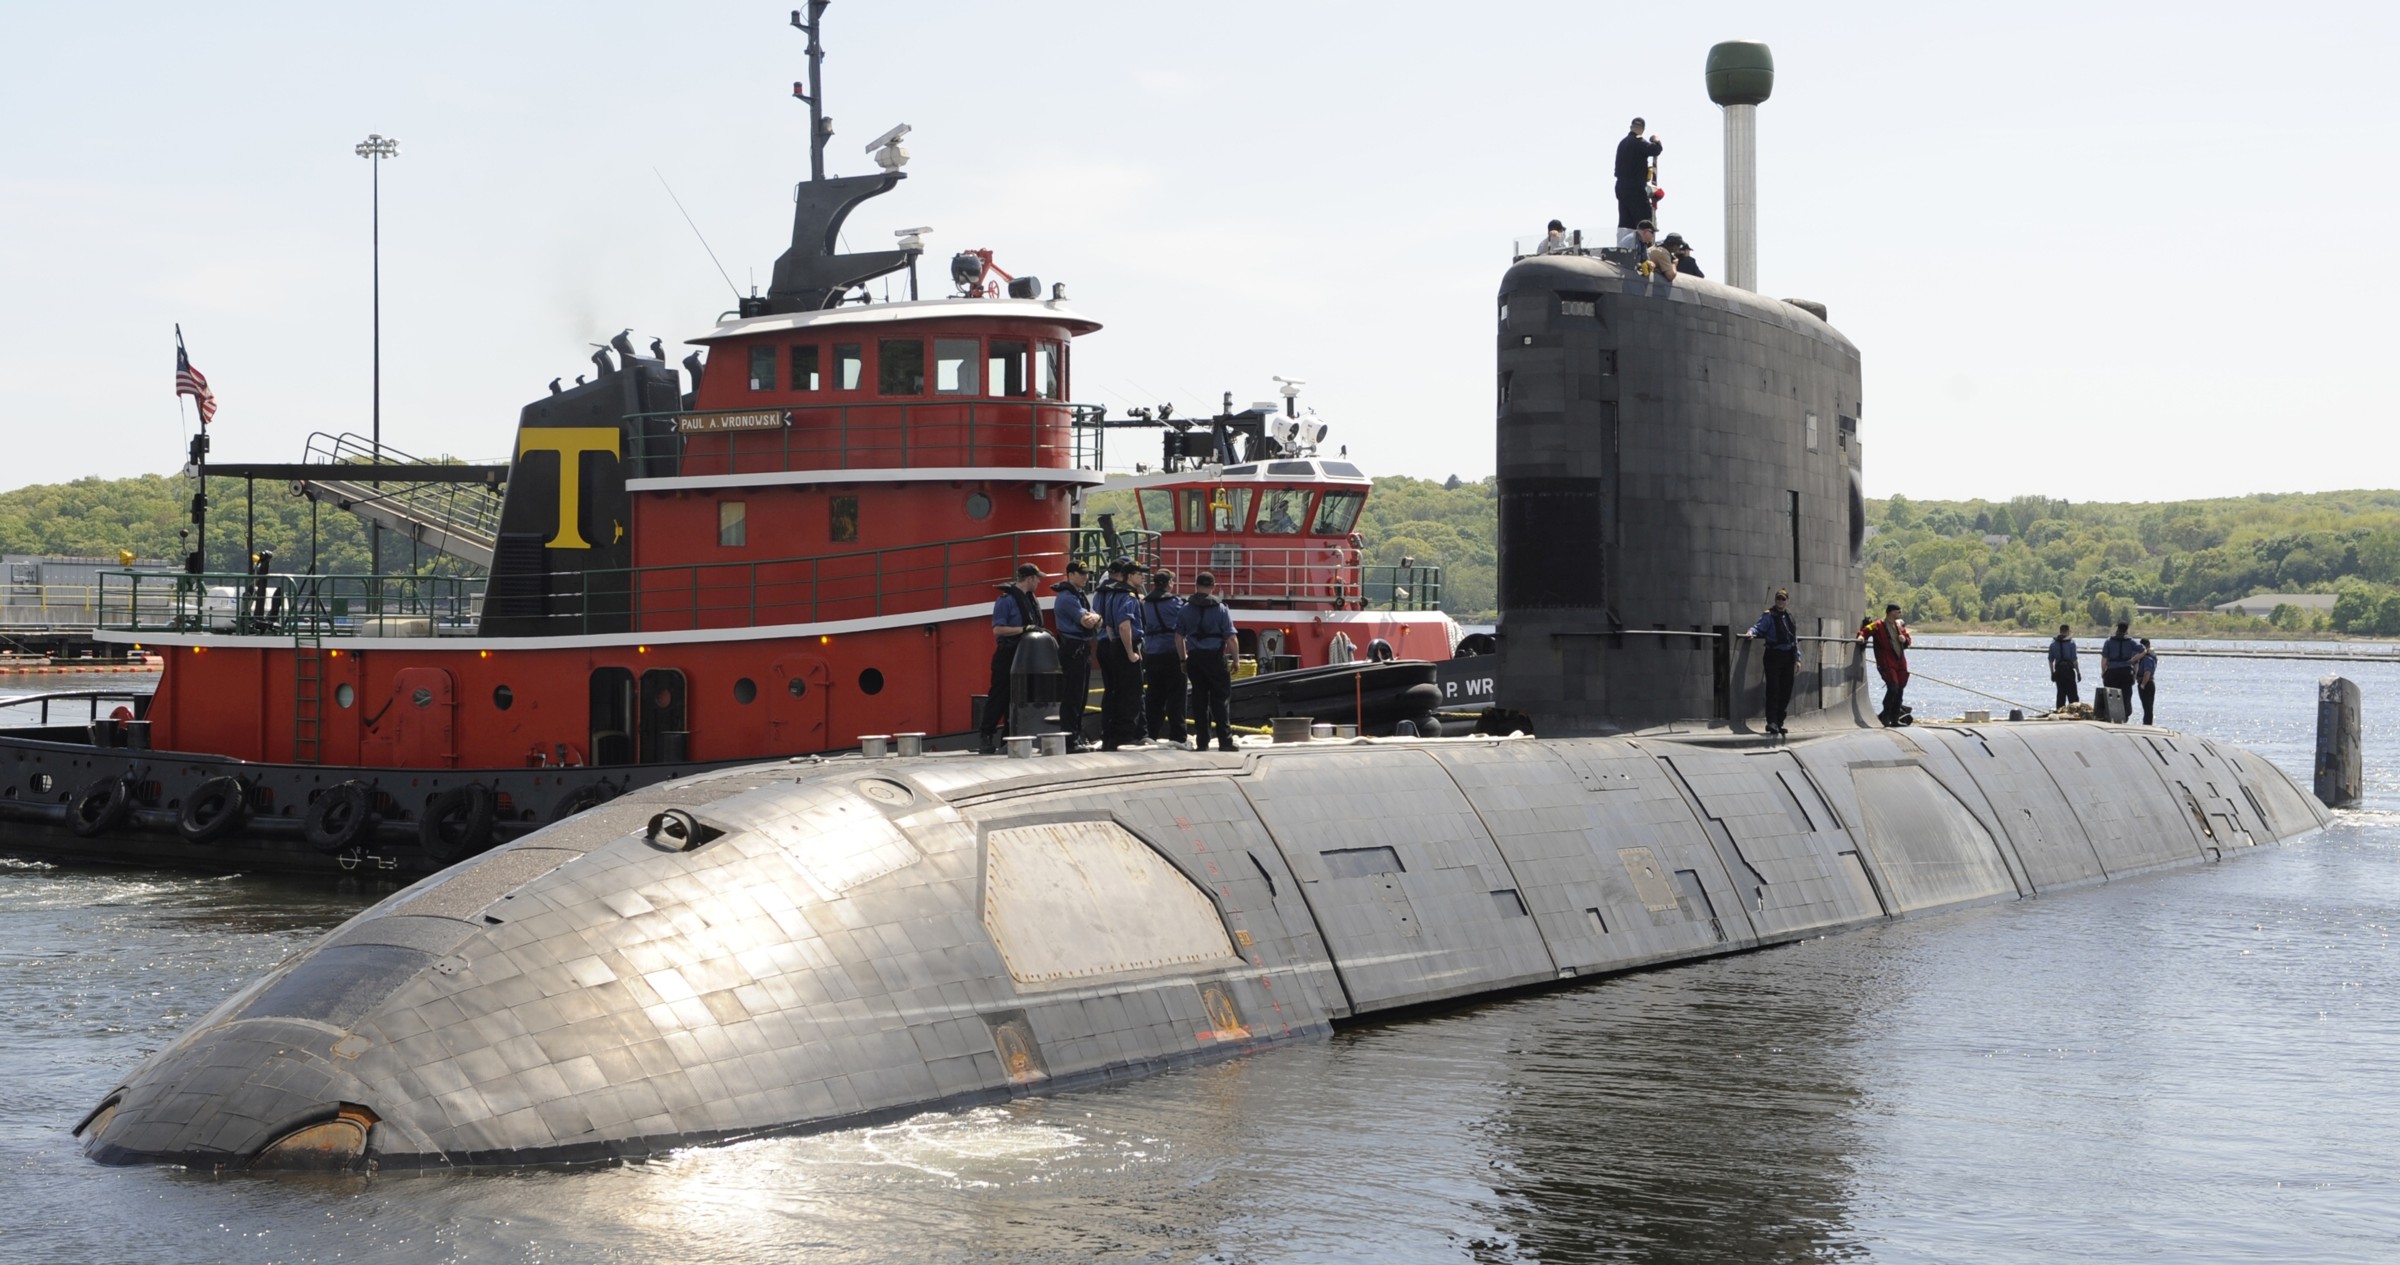 ssk-878 hmcs corner brook victoria upholder class patrol submarine ncsm royal canadian navy 07